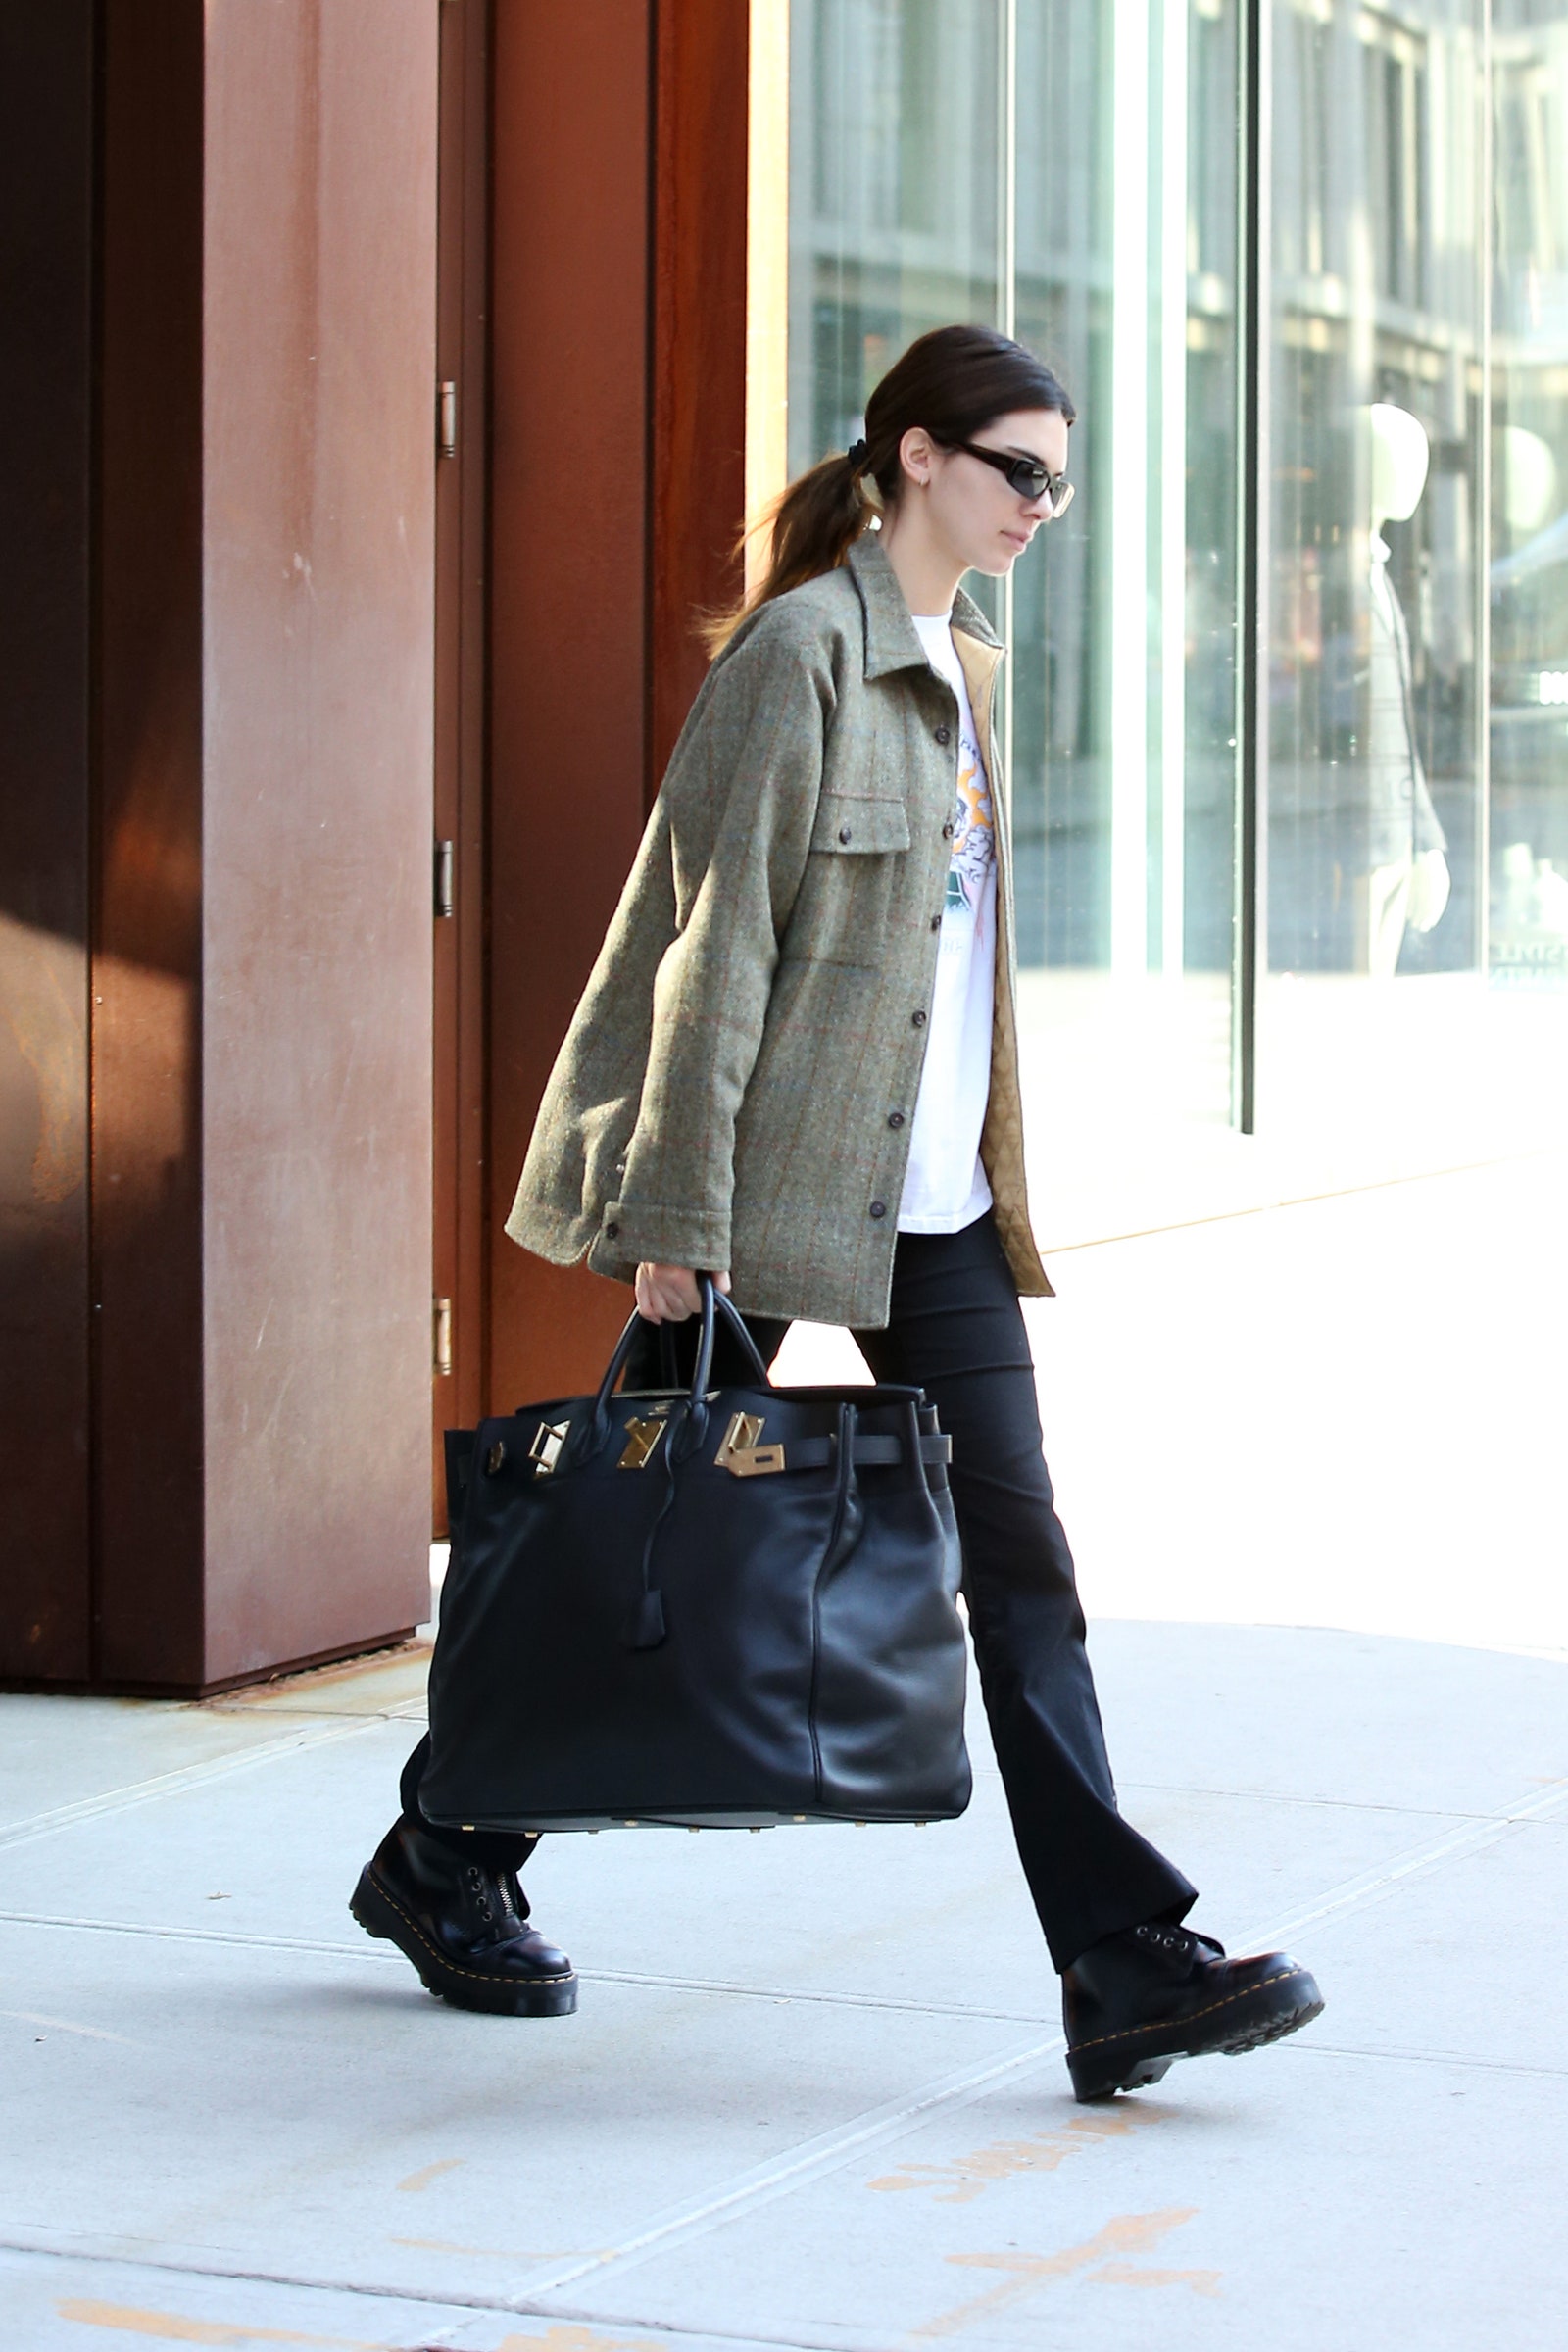 Get Kylie Jenner's favourite bag: Balenciaga Classic City tote bag